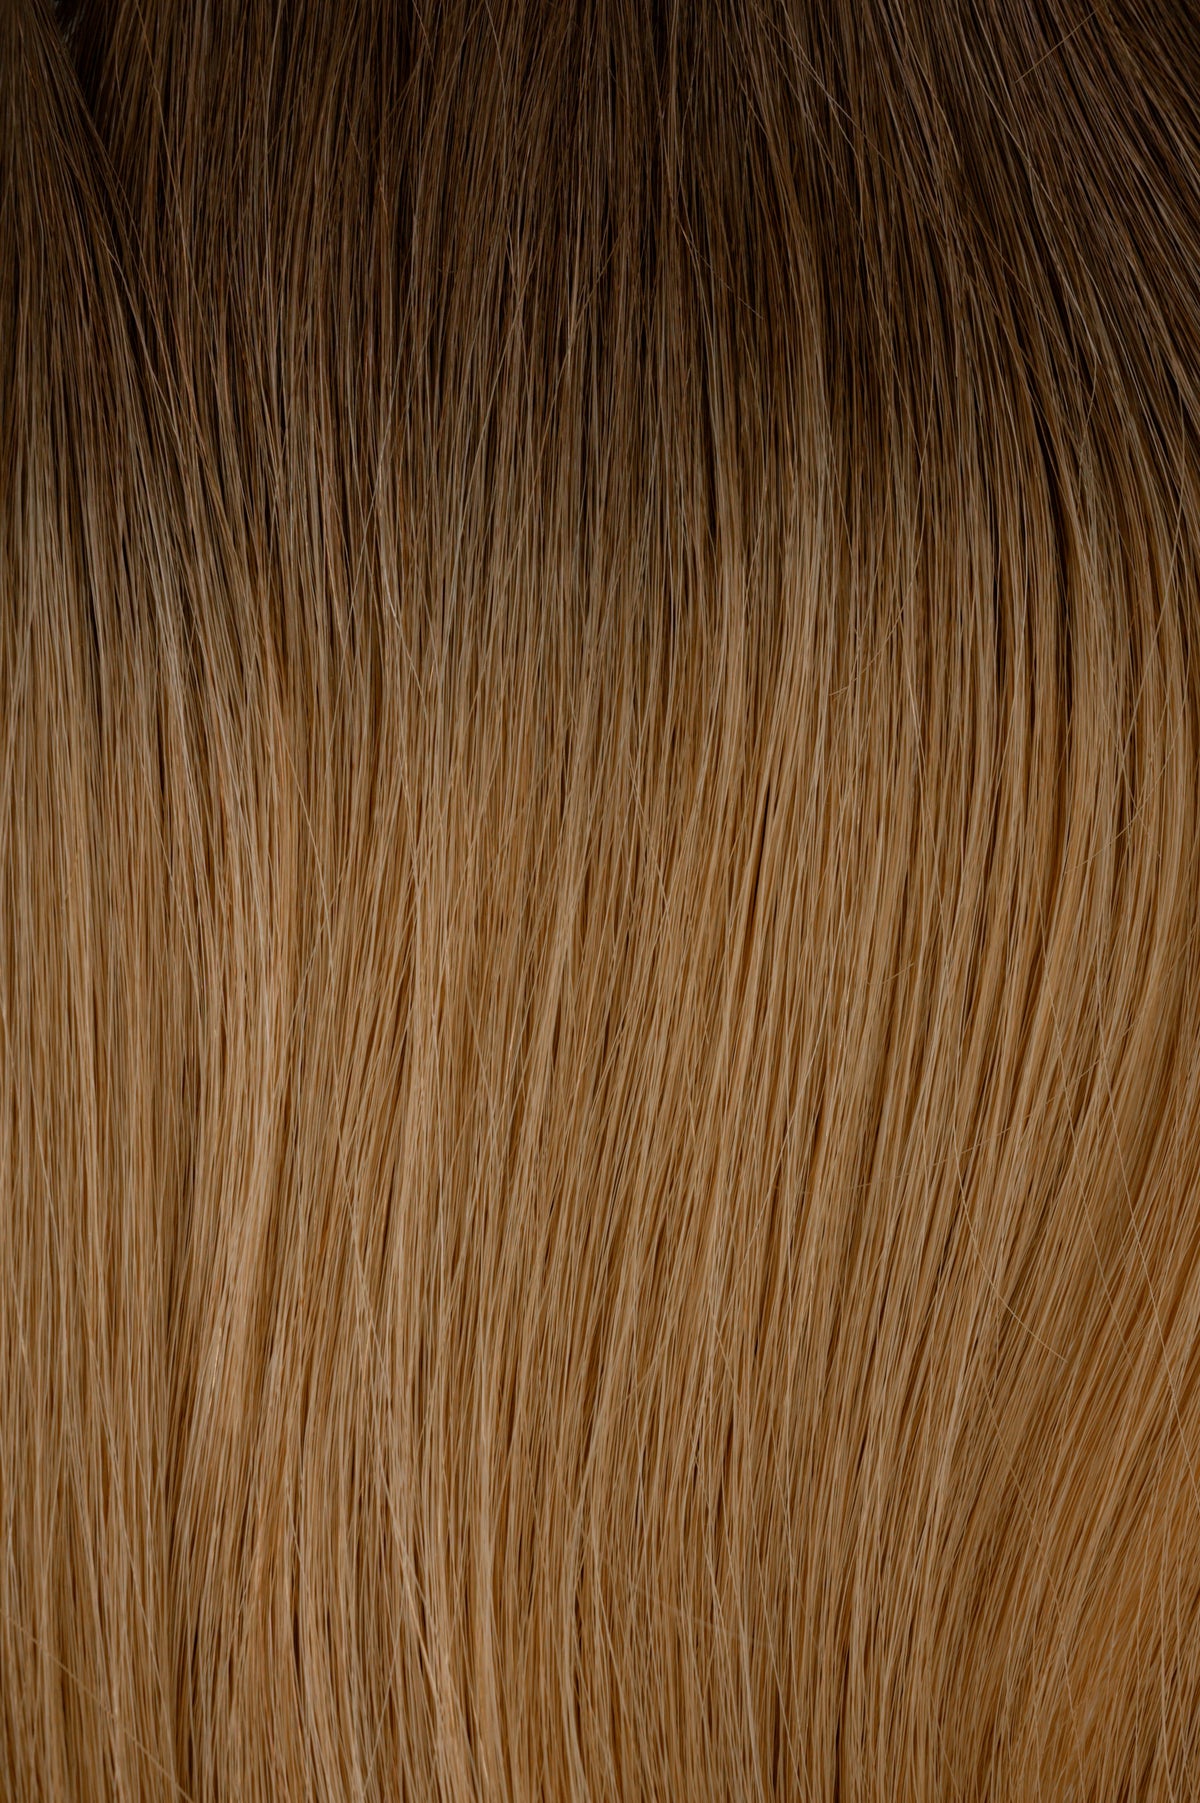 #Ginger Snap Nano Tip Hair Extensions